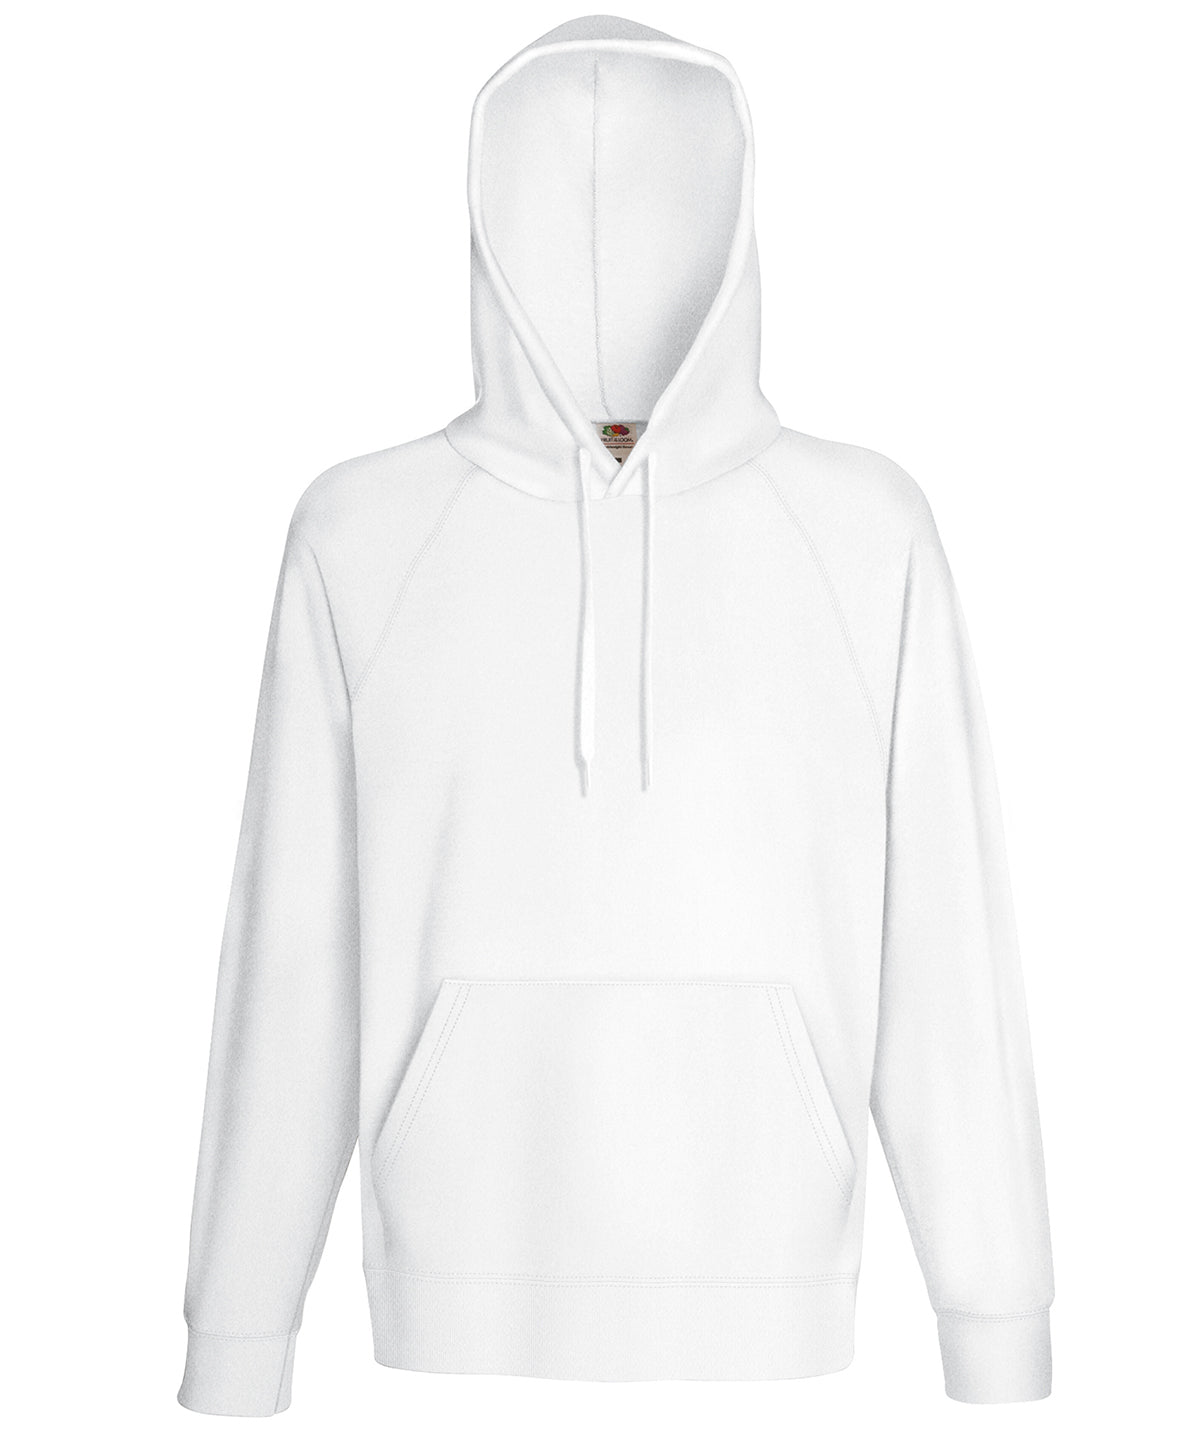 Hettupeysur - Lightweight Hooded Sweatshirt